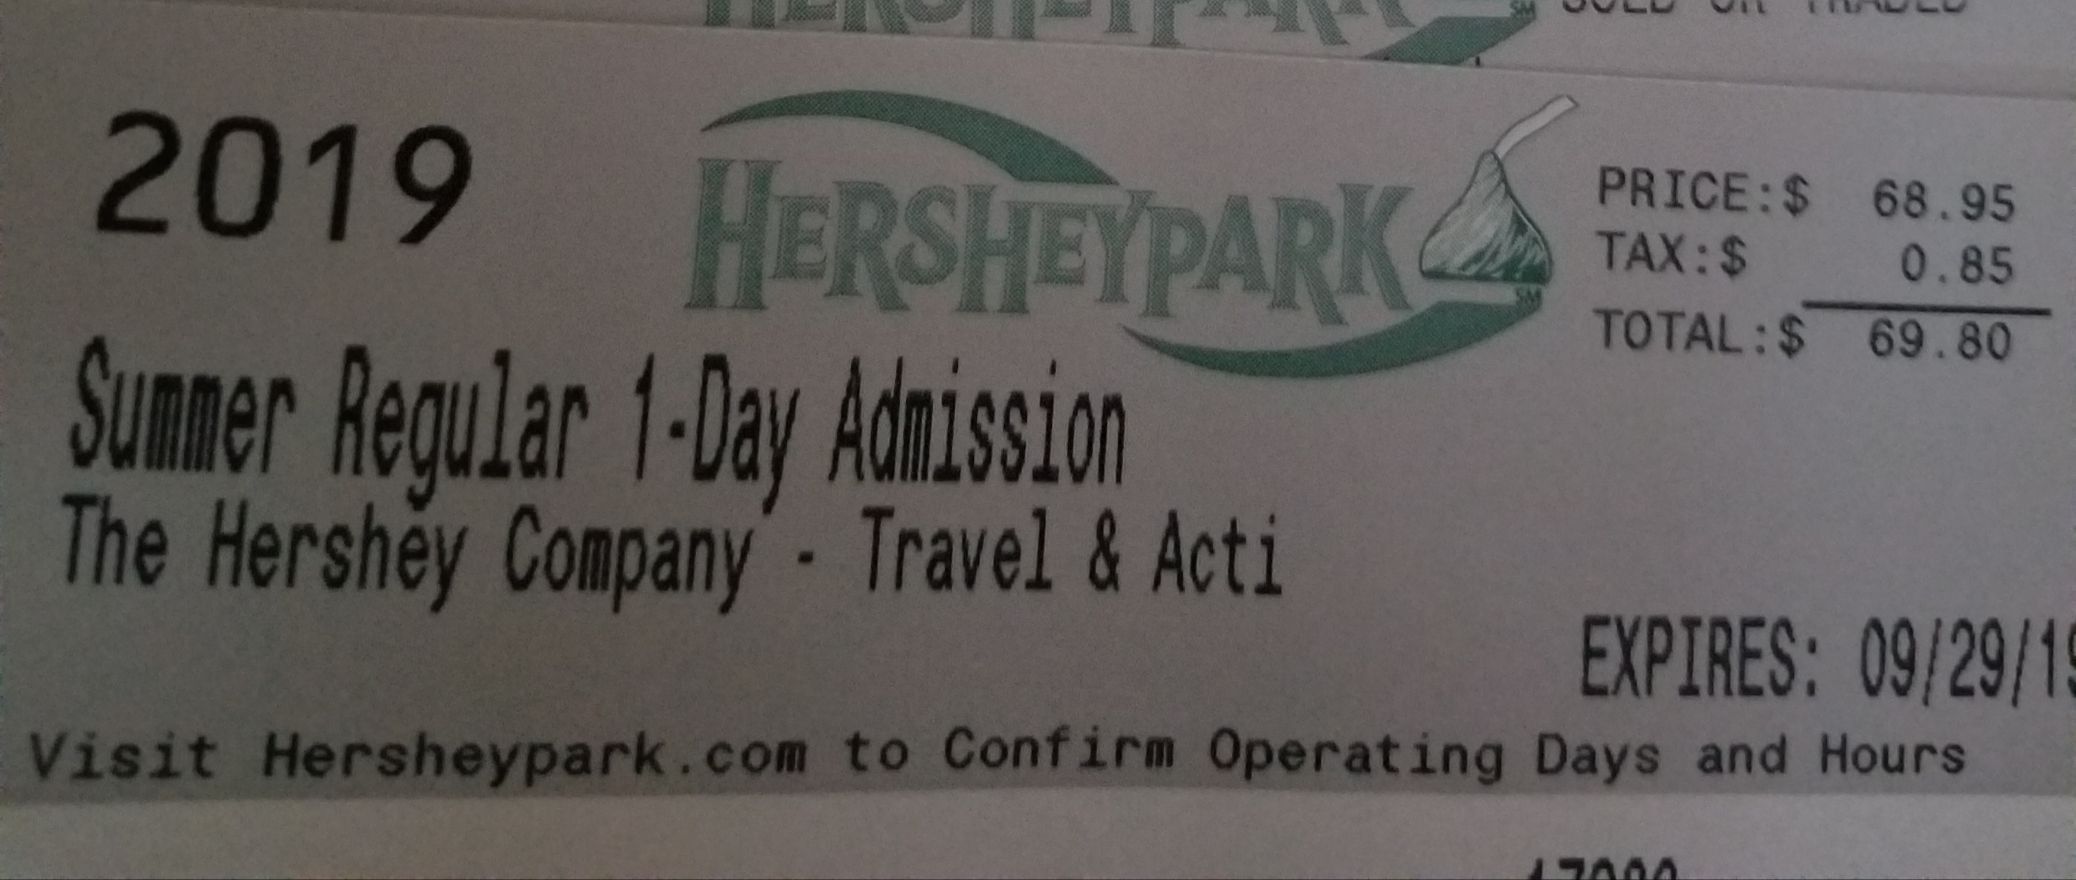 Hershey Park Tickets